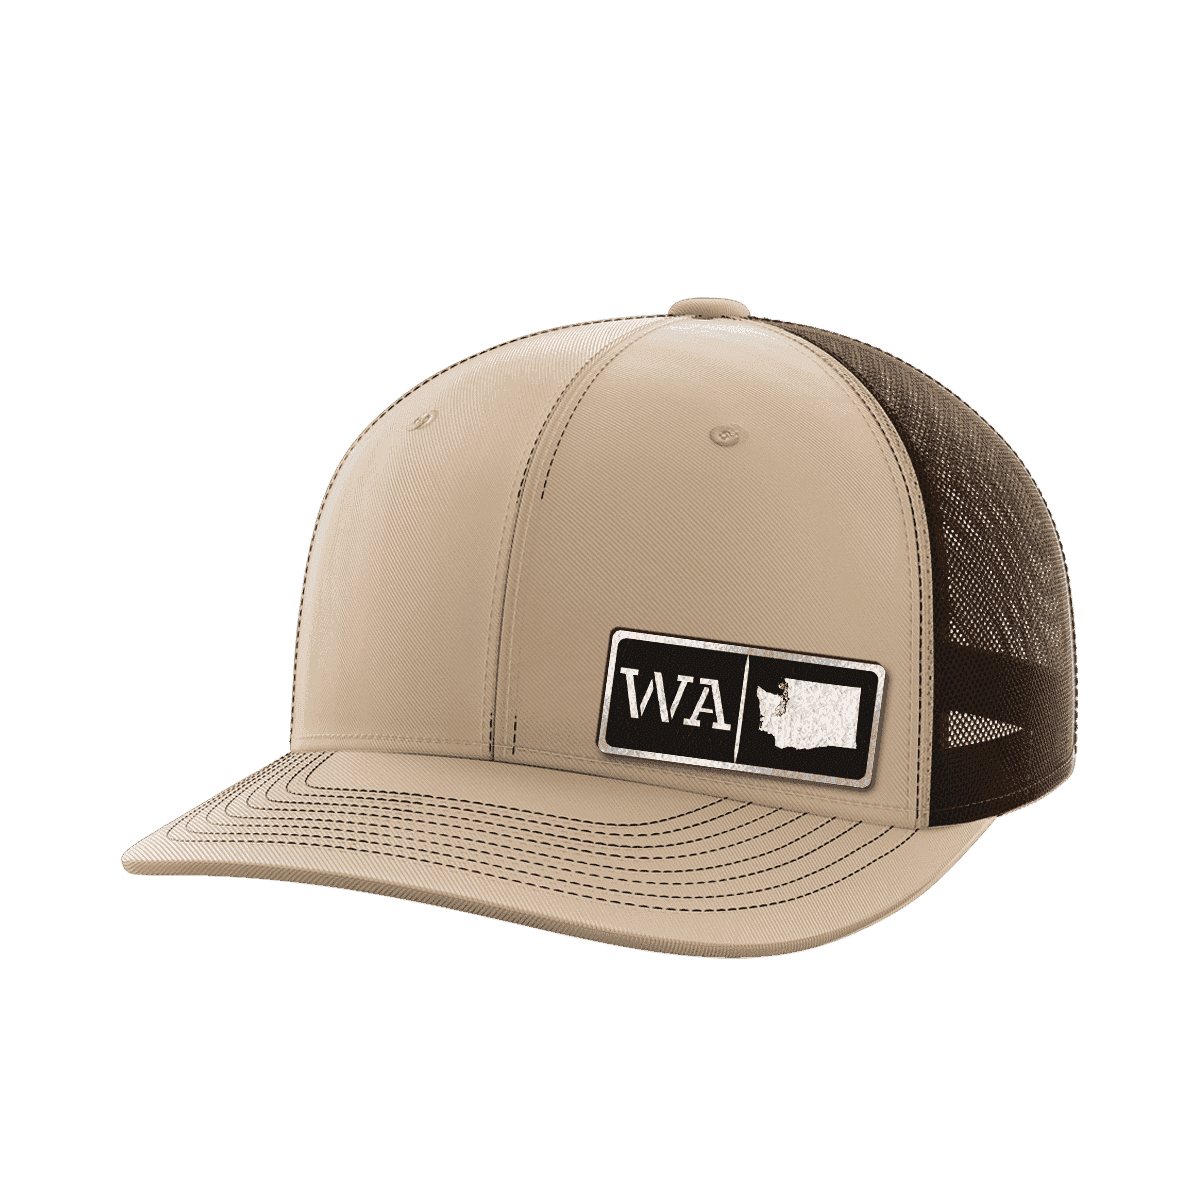 Washington Homegrown Hats - Greater Half